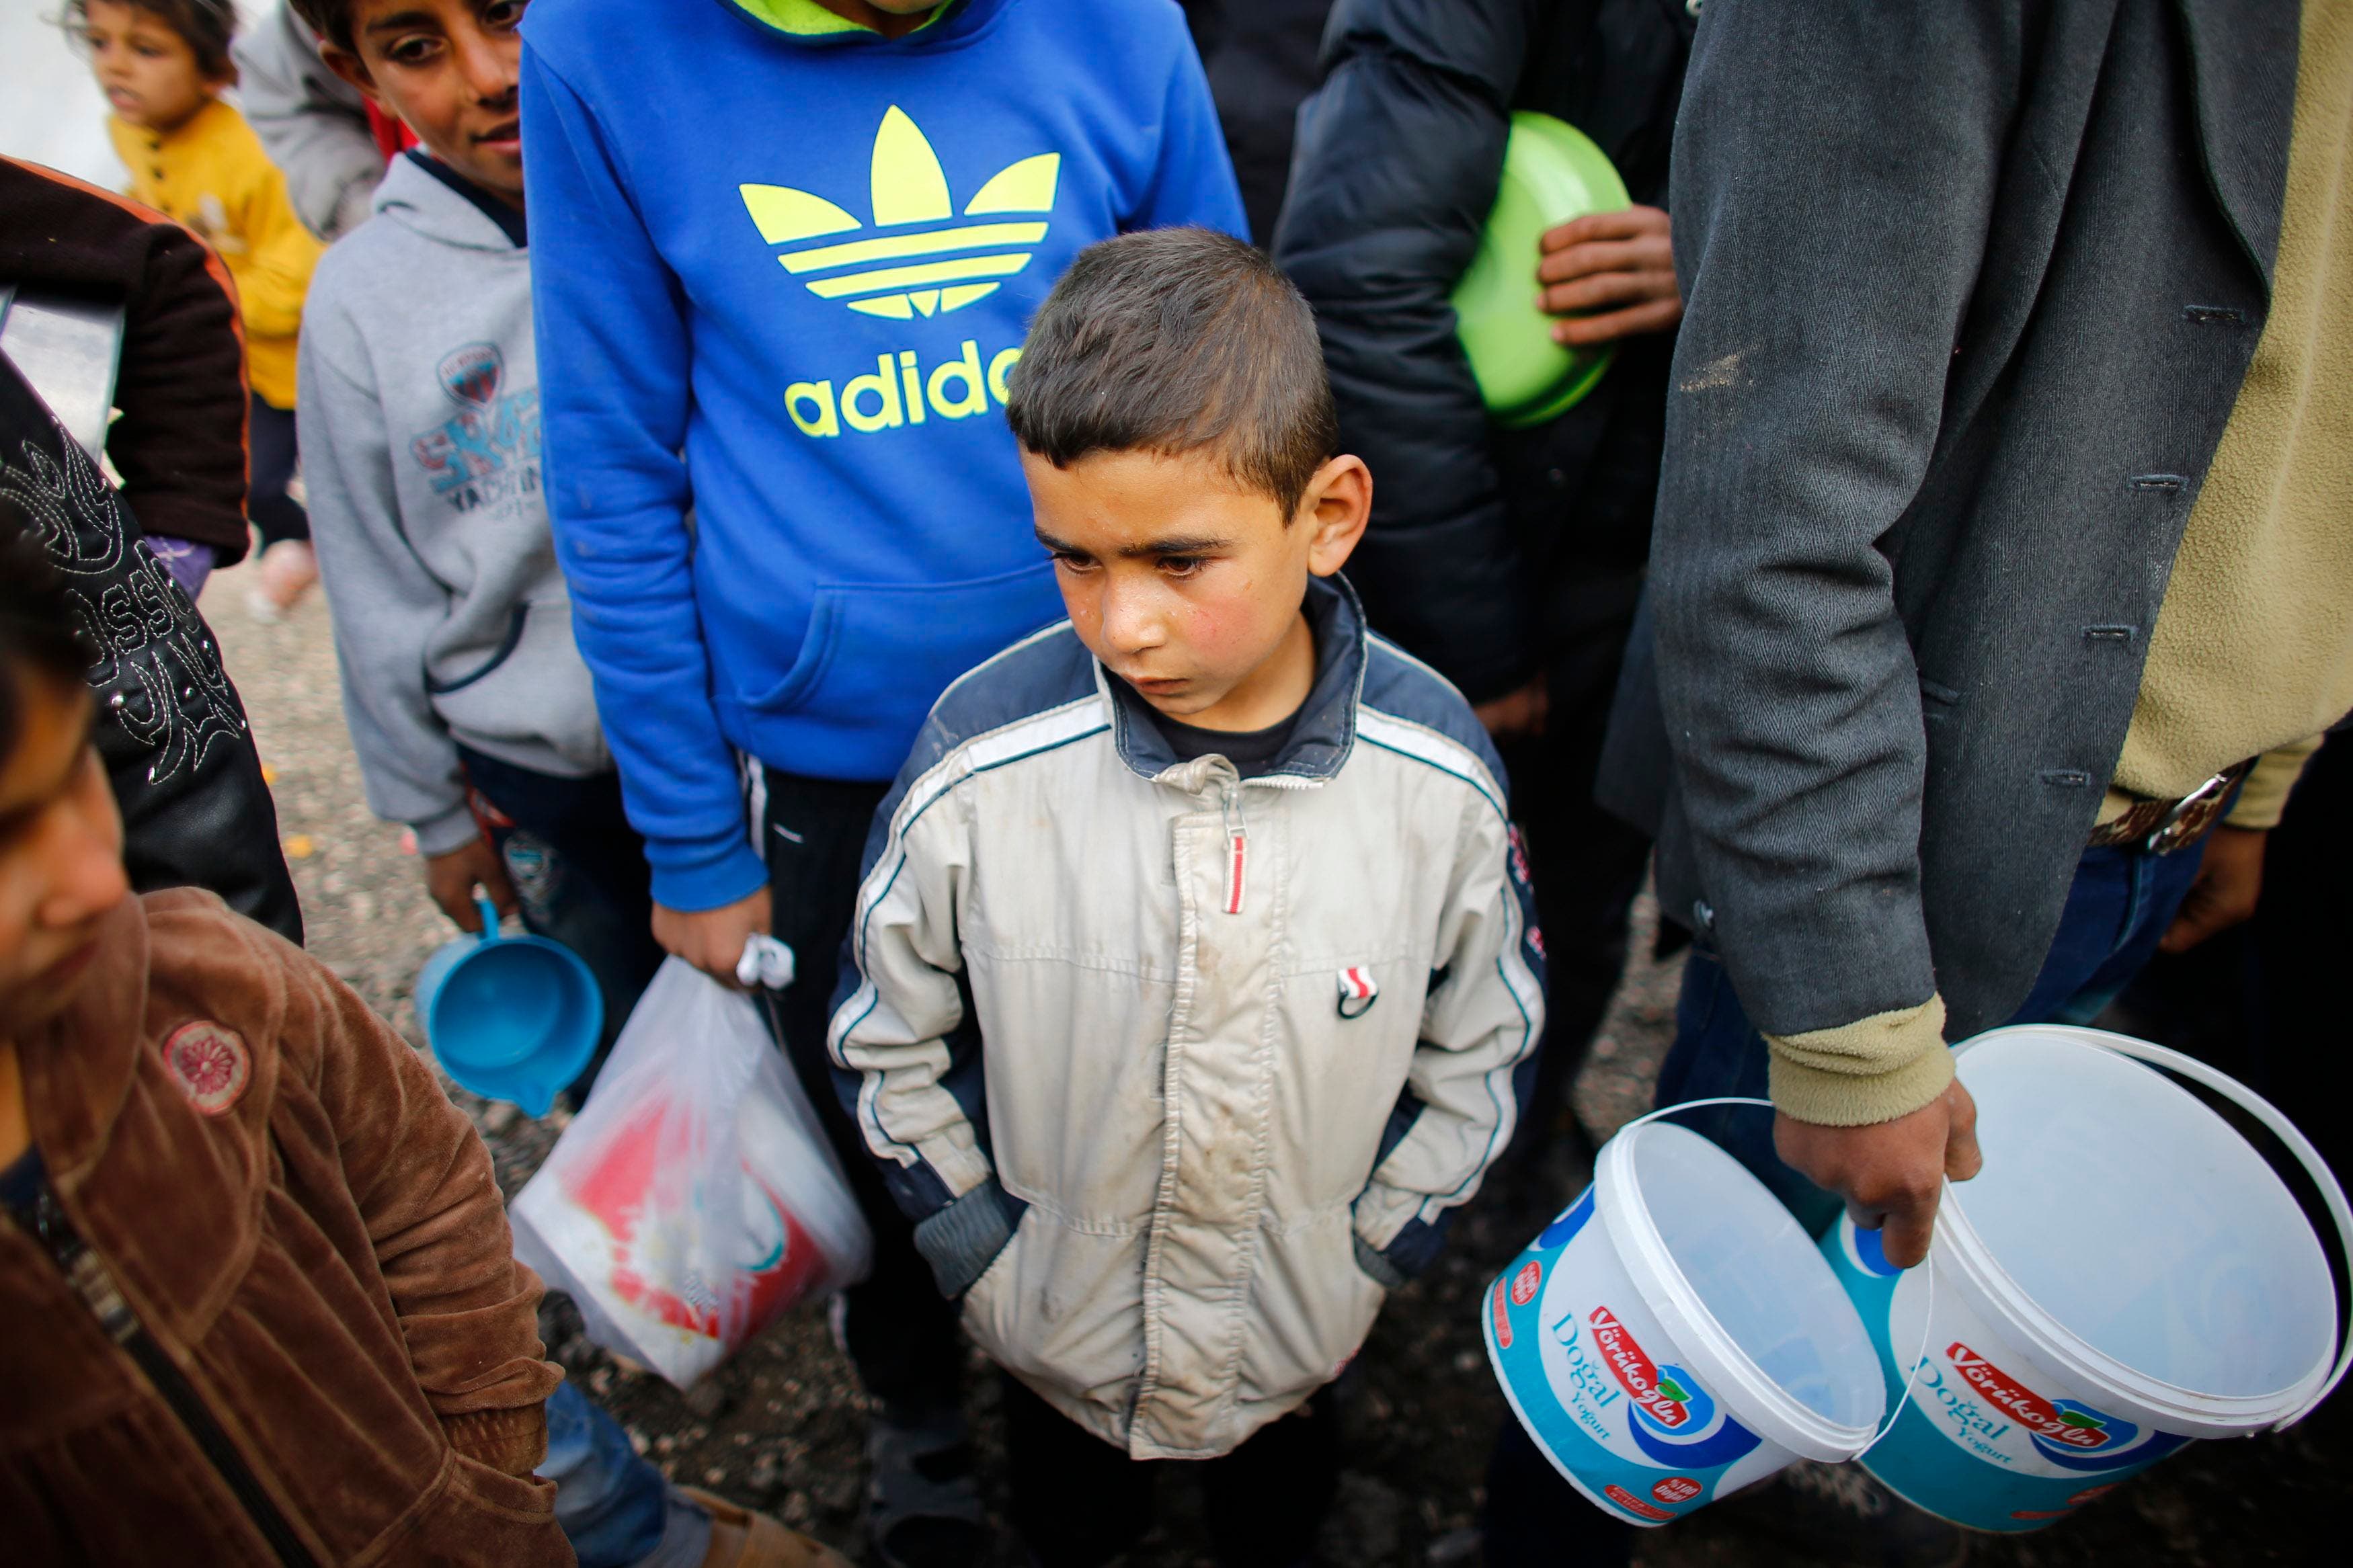 Kurdish refugees from the Syrian town of Kobani